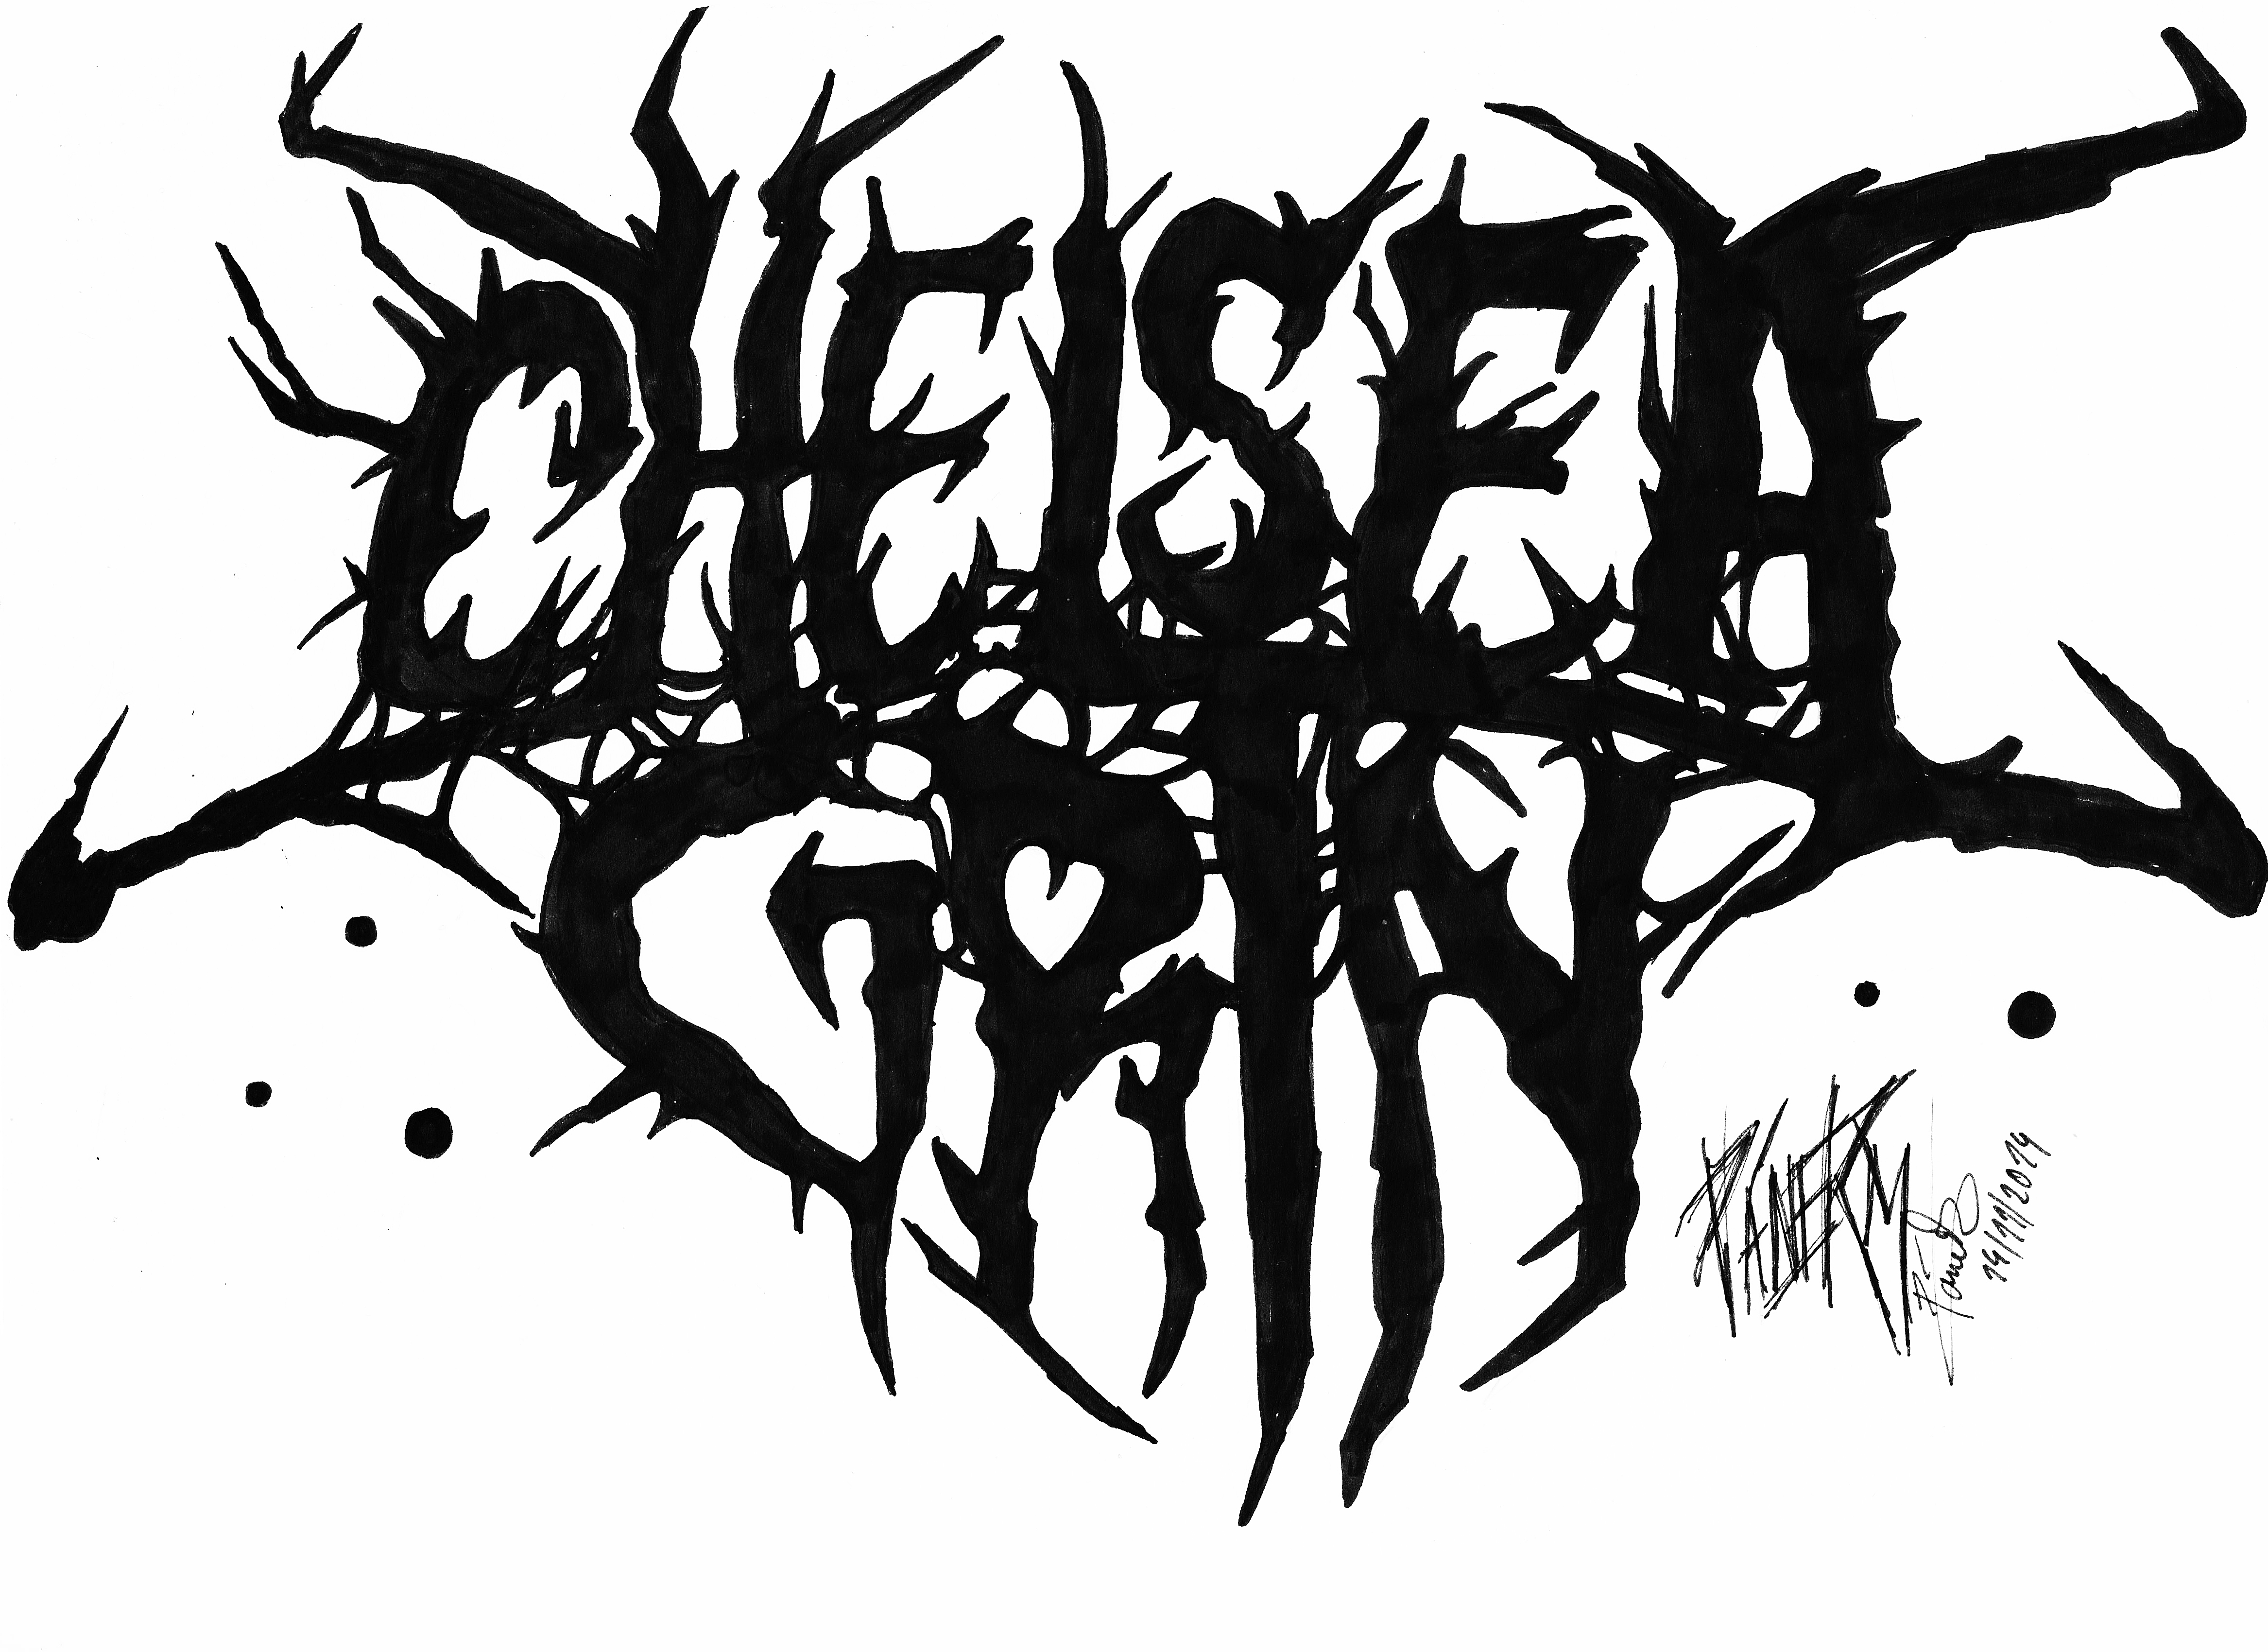 Chelsea Grin logo by SmushrCZ on DeviantArt